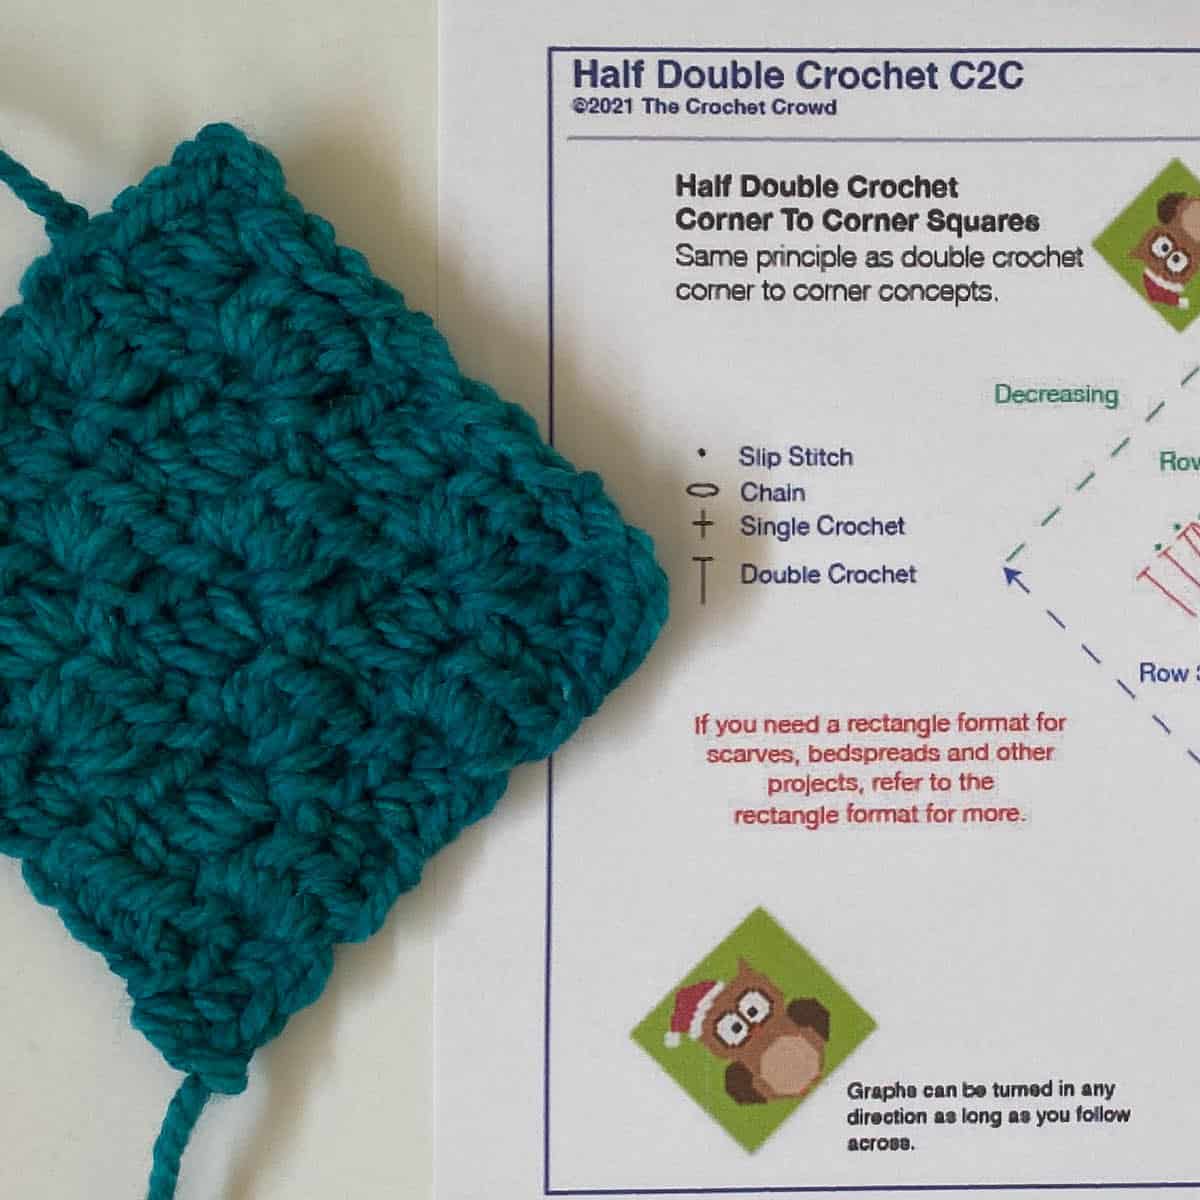 How to Corner to Corner Crochet (C2C) for Beginners + Patterns